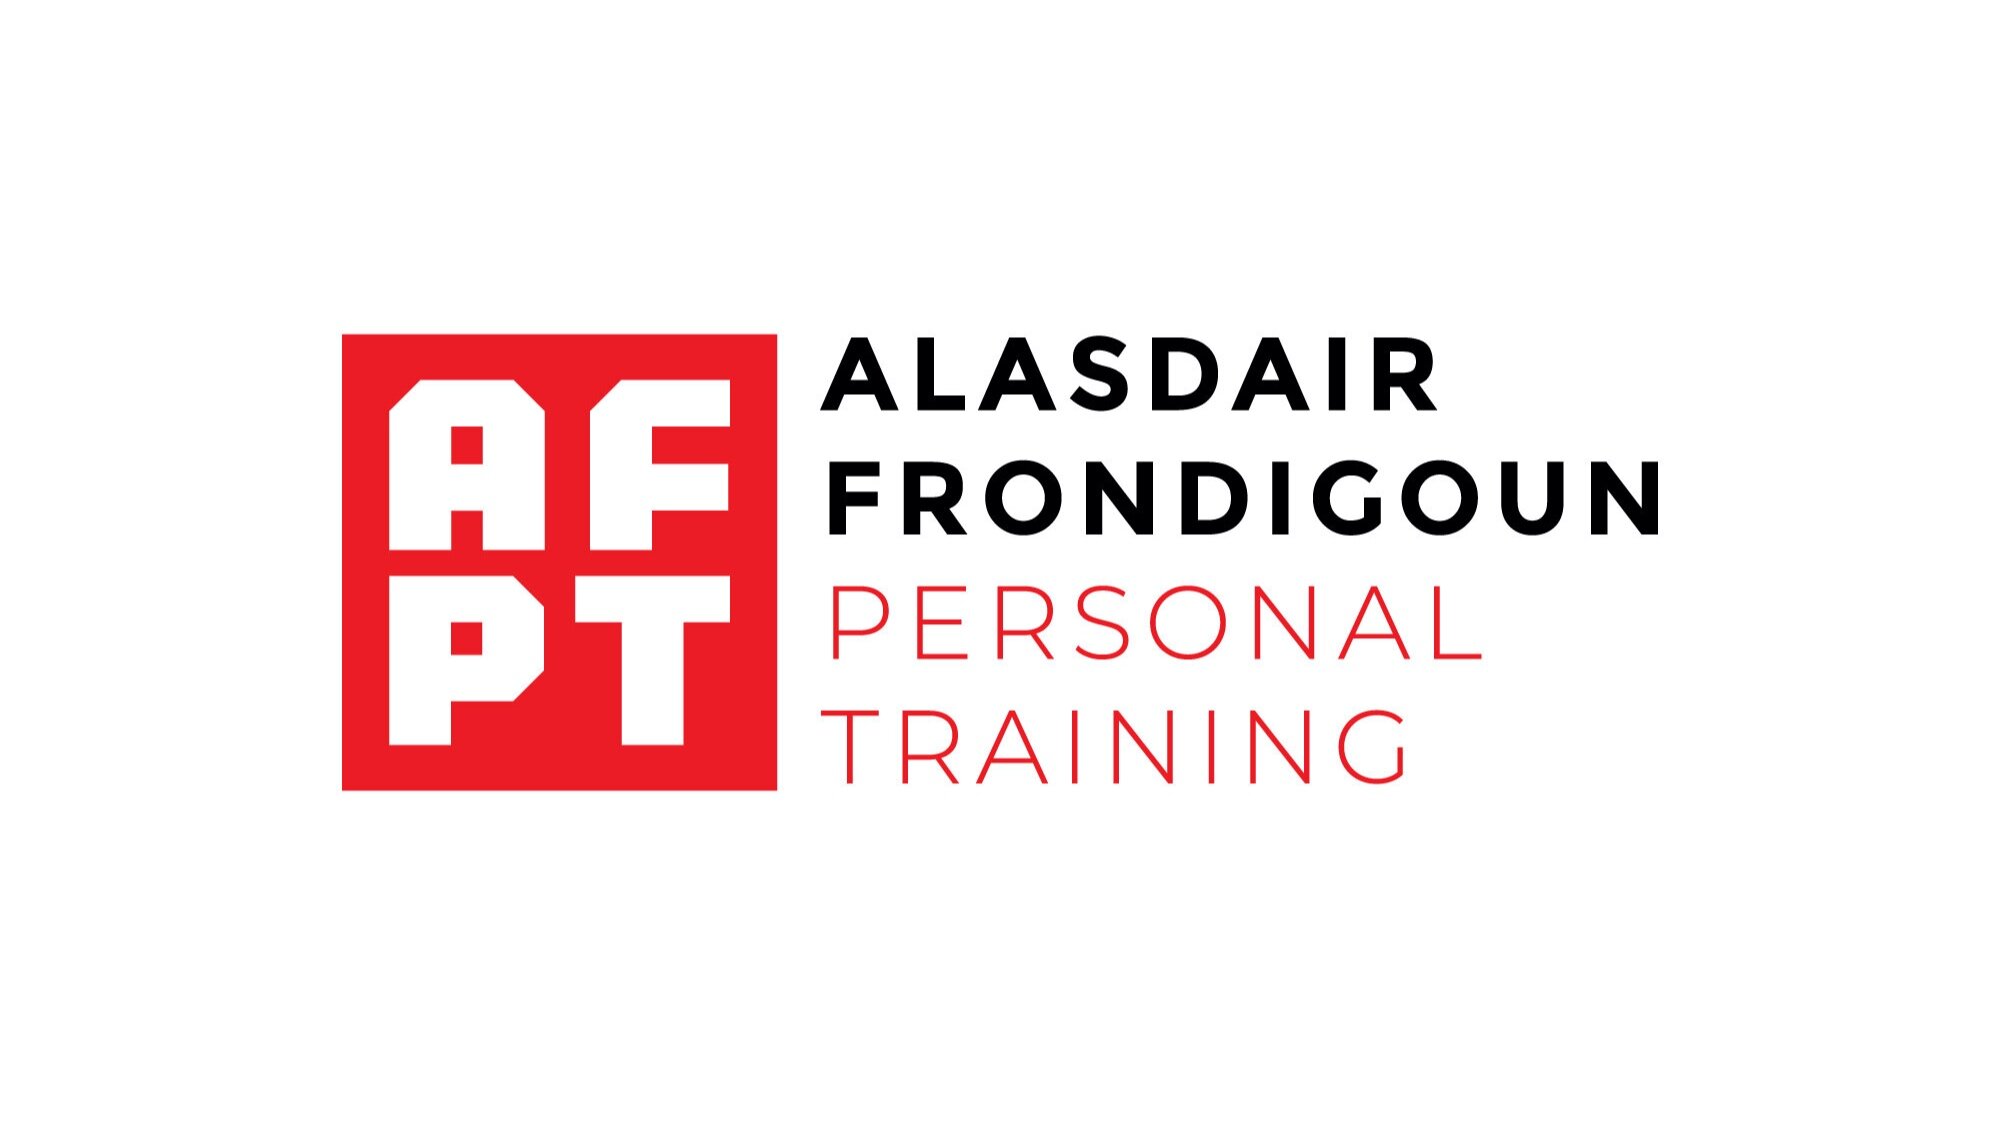 Alasdair Frondigoun Personal Training